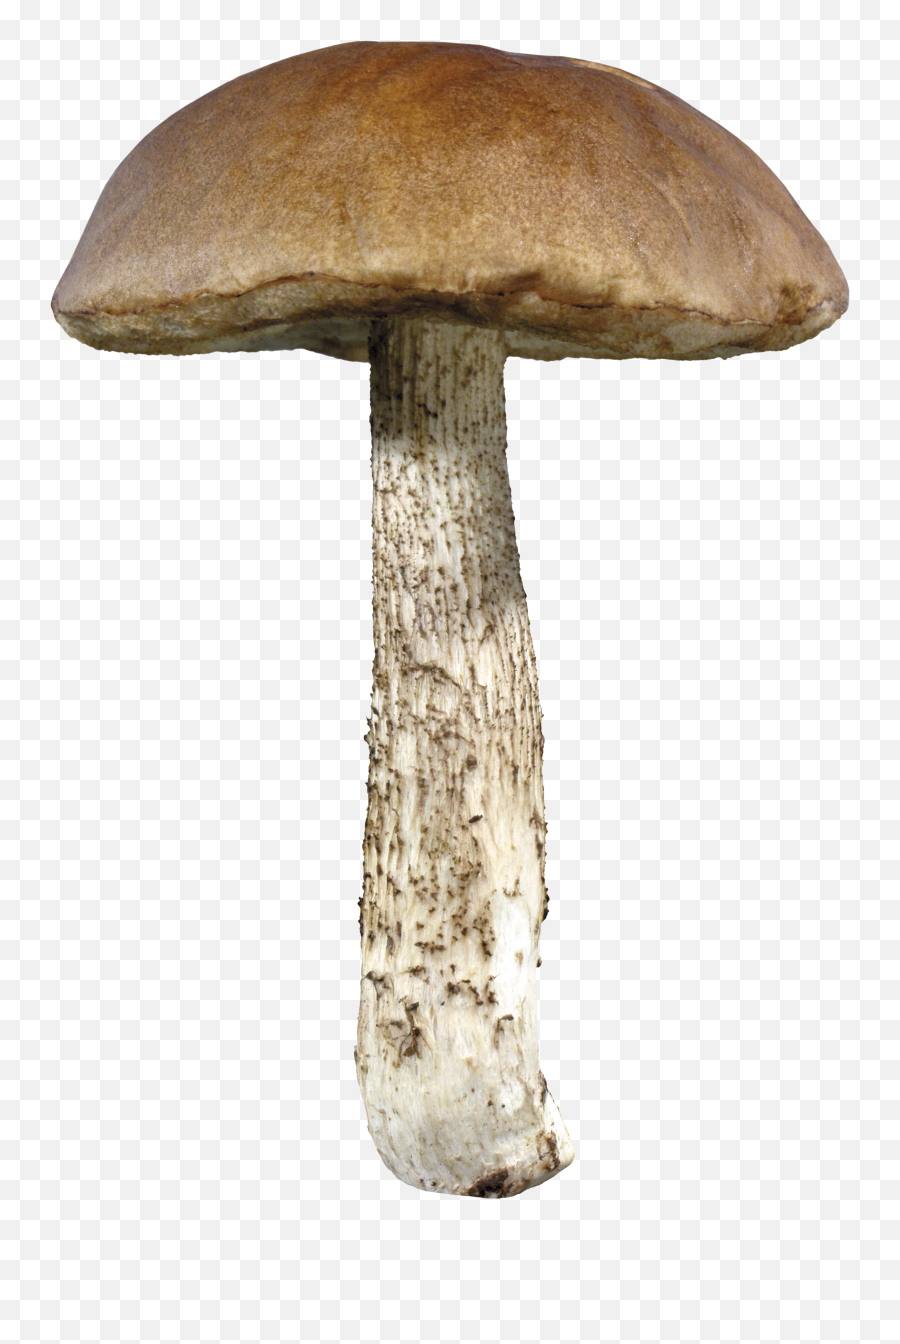 Mushroom Png Image - Mushrooms Png,Mushroom Transparent Background